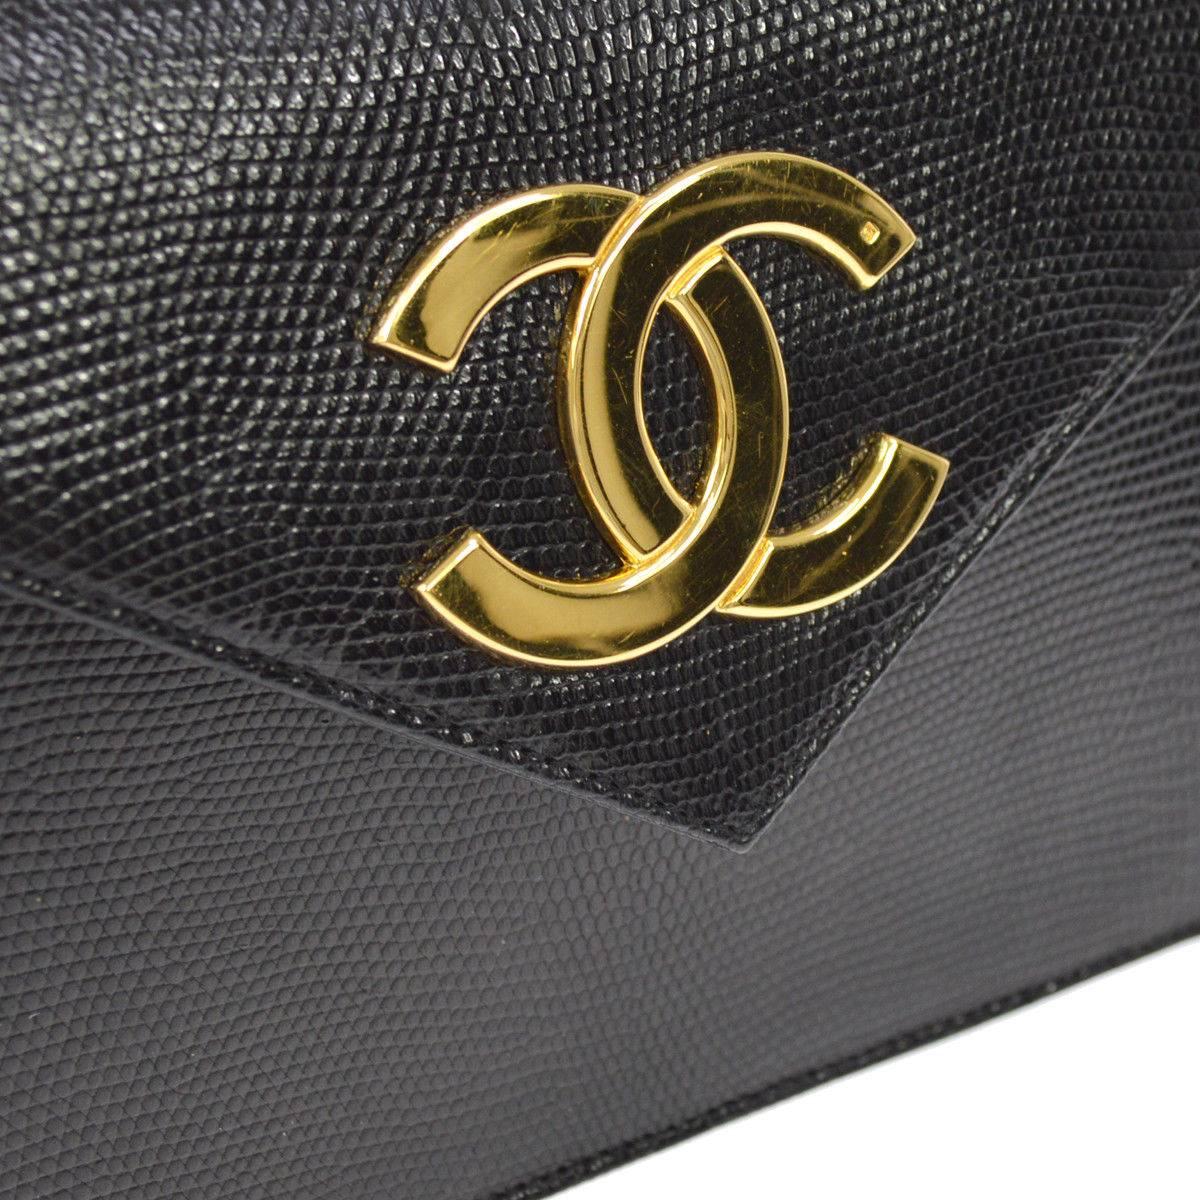 Chanel Rare Black Exotic Leather Gold Hardware Logo Evening Shoulder Flap Bag

Lizard leather
Gold tone hardware
Leather lining 
Date code present
Made in France
Shoulder strap drop 20